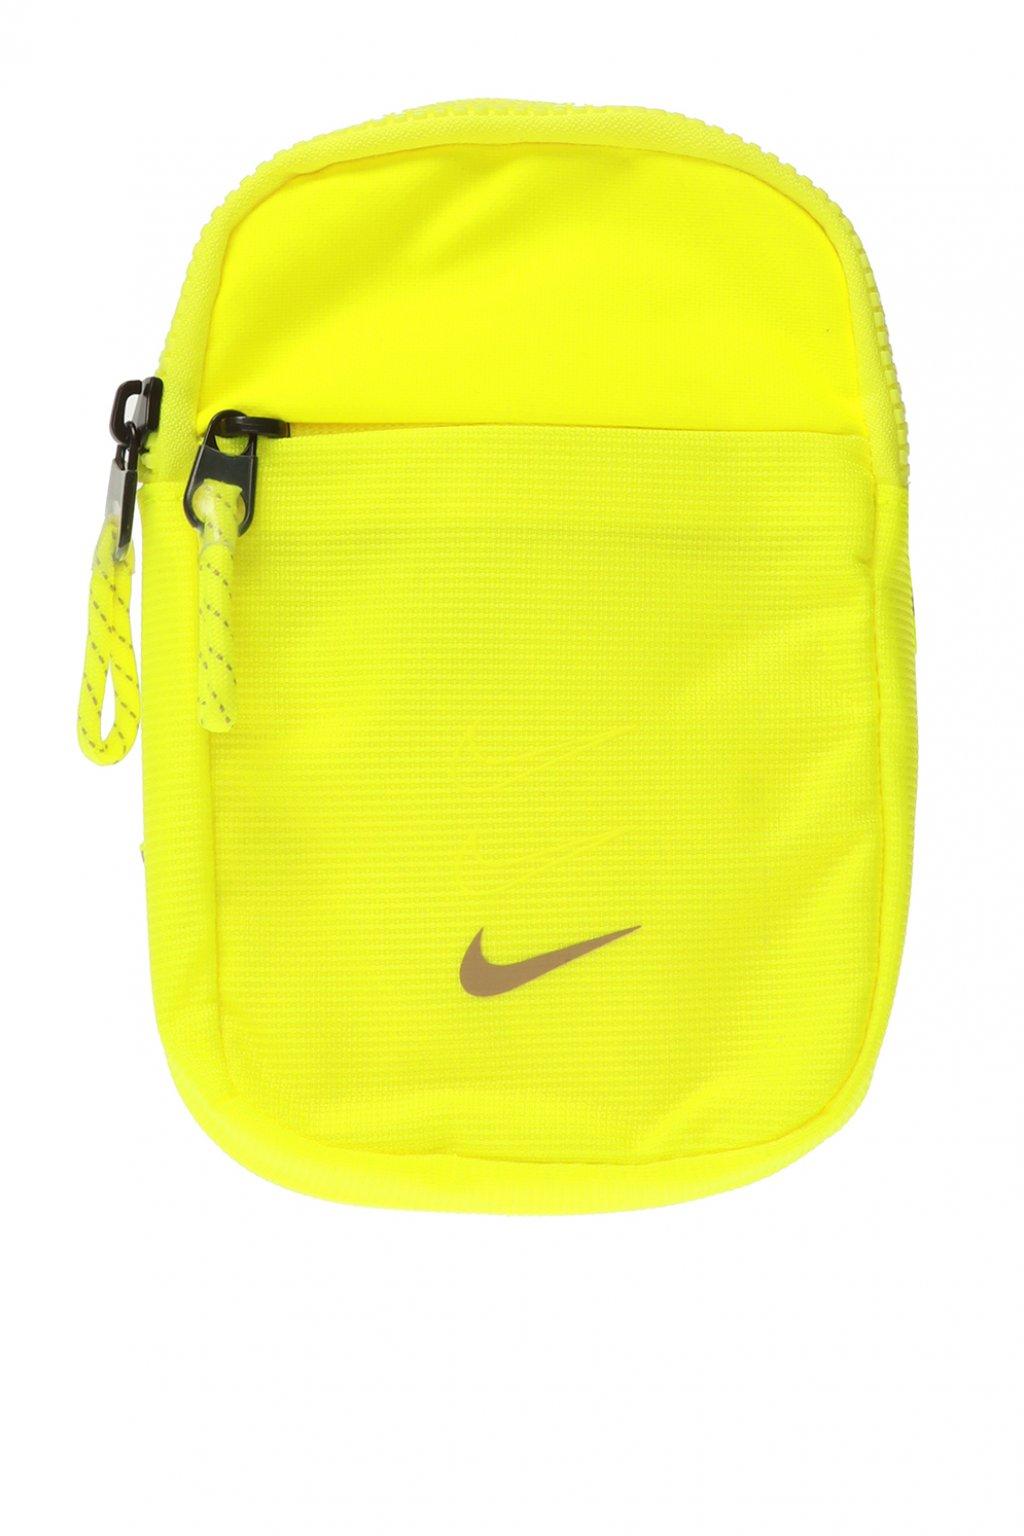 Nike Synthetic Logo Shoulder Bag Yellow for Men - Lyst